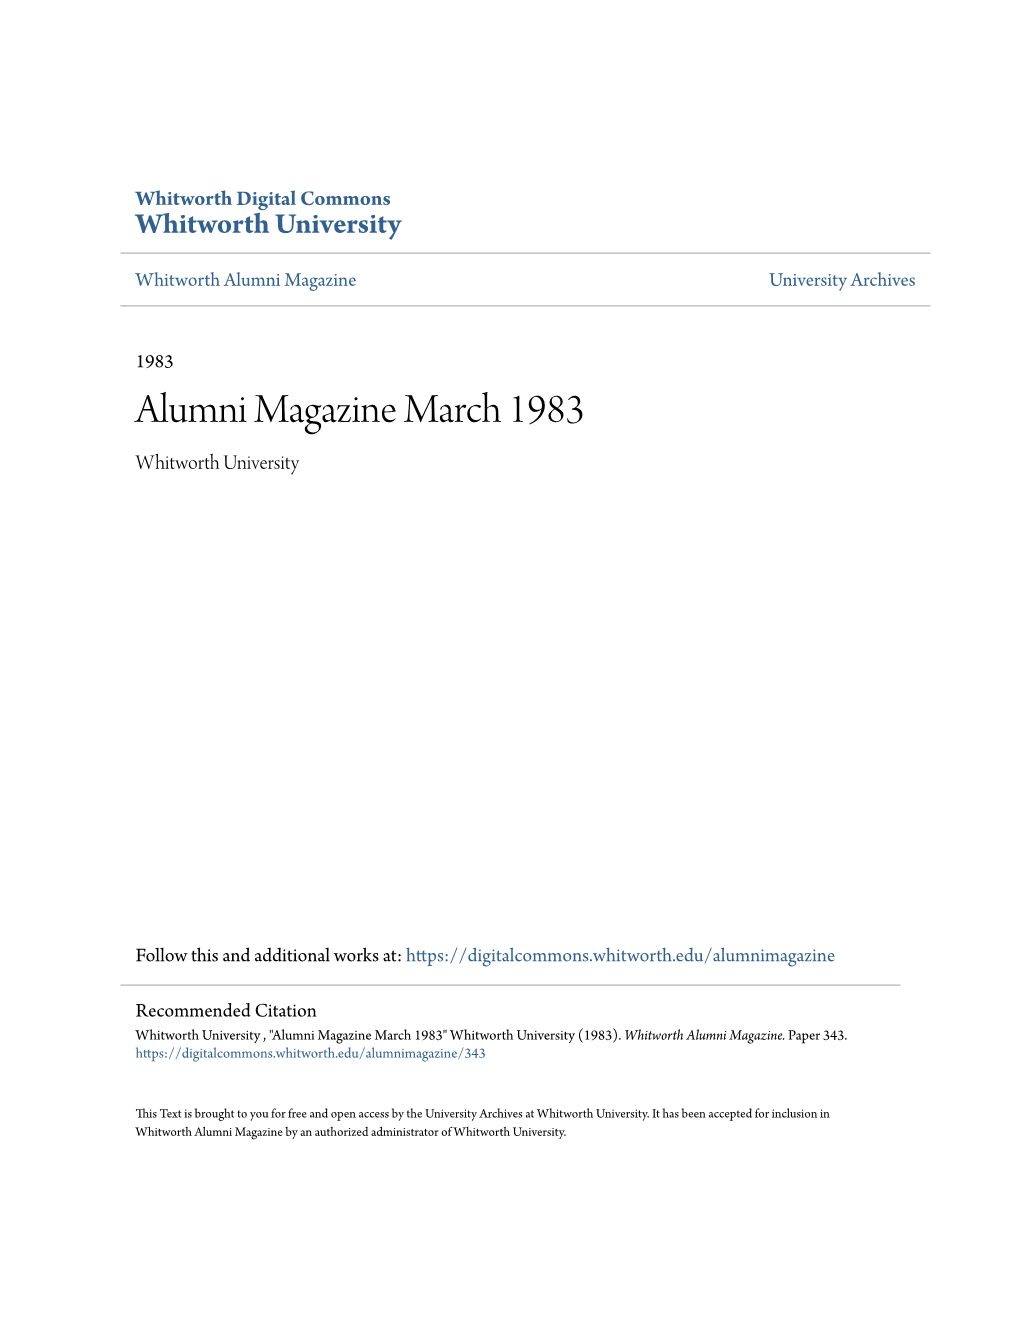 Alumni Magazine March 1983 Whitworth University